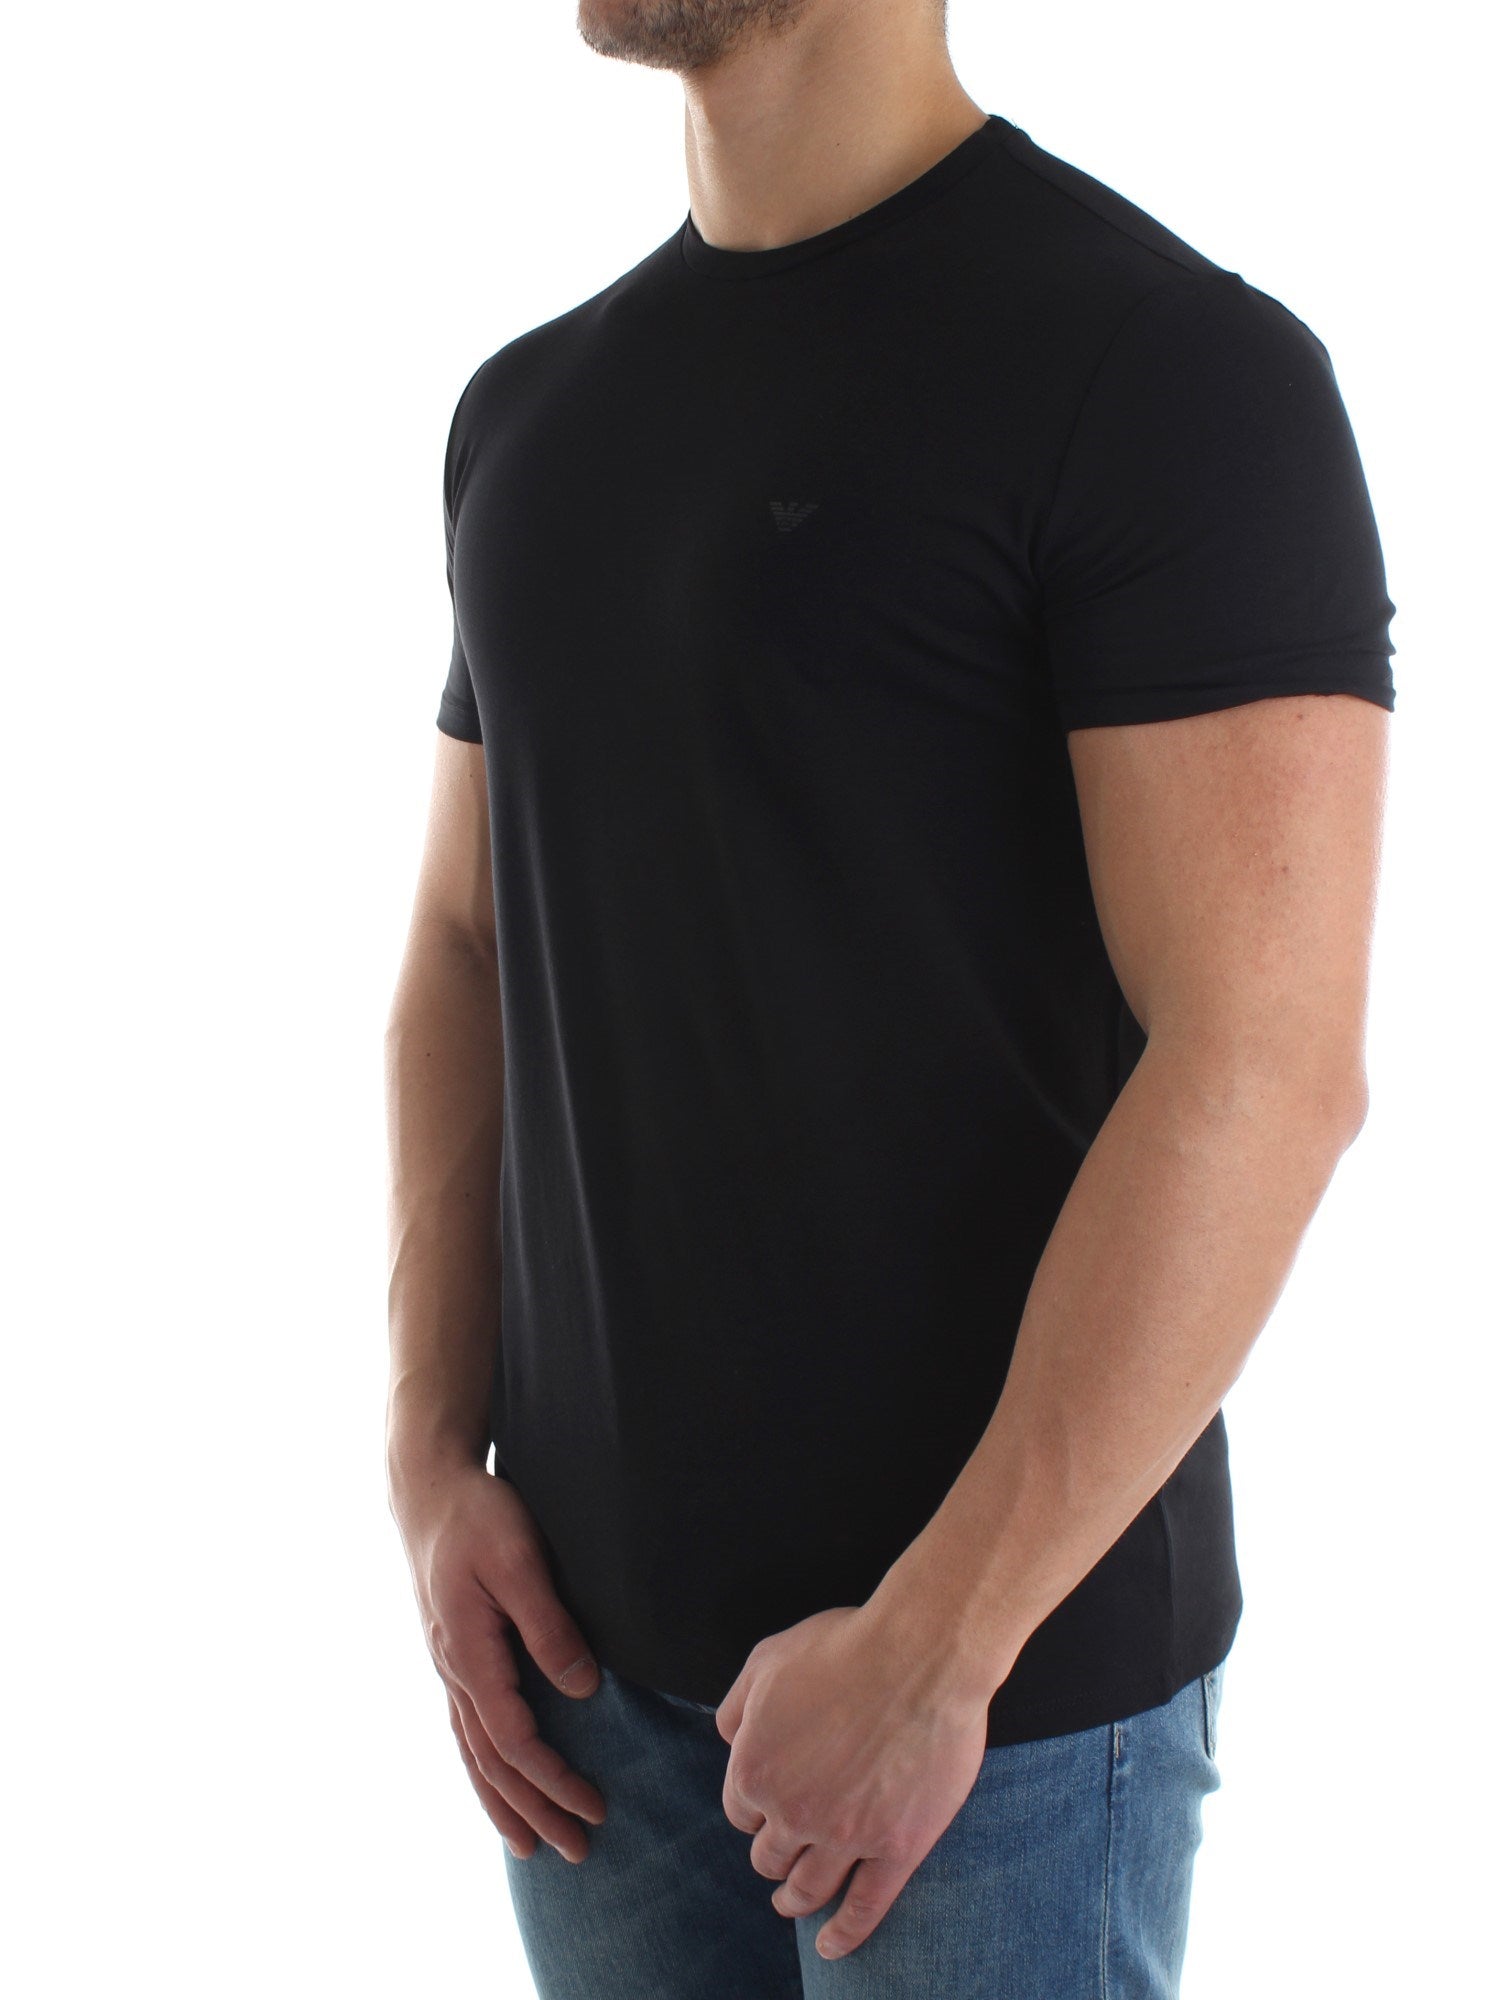 T-Shirt girocollo puro cotone / Nero - Ideal Moda